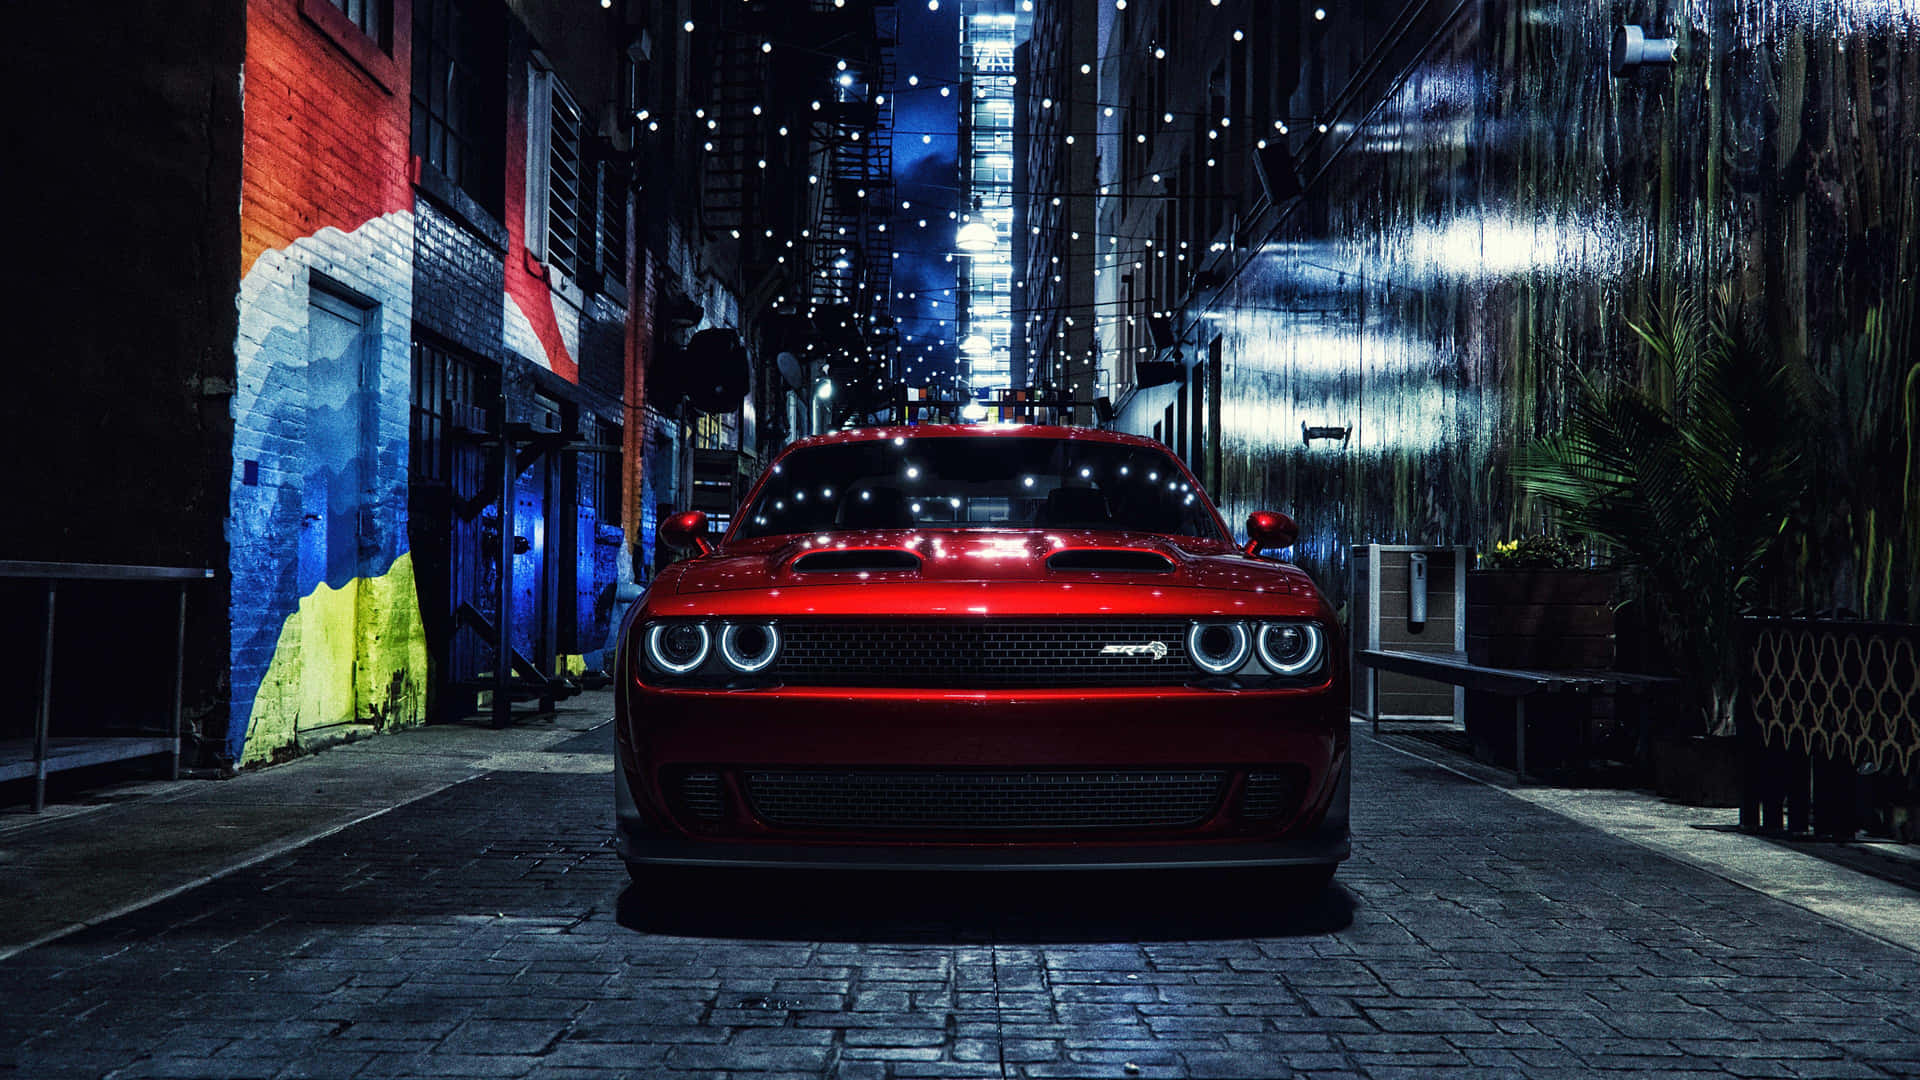 Red Sports Car Urban Night Scene.jpg Wallpaper